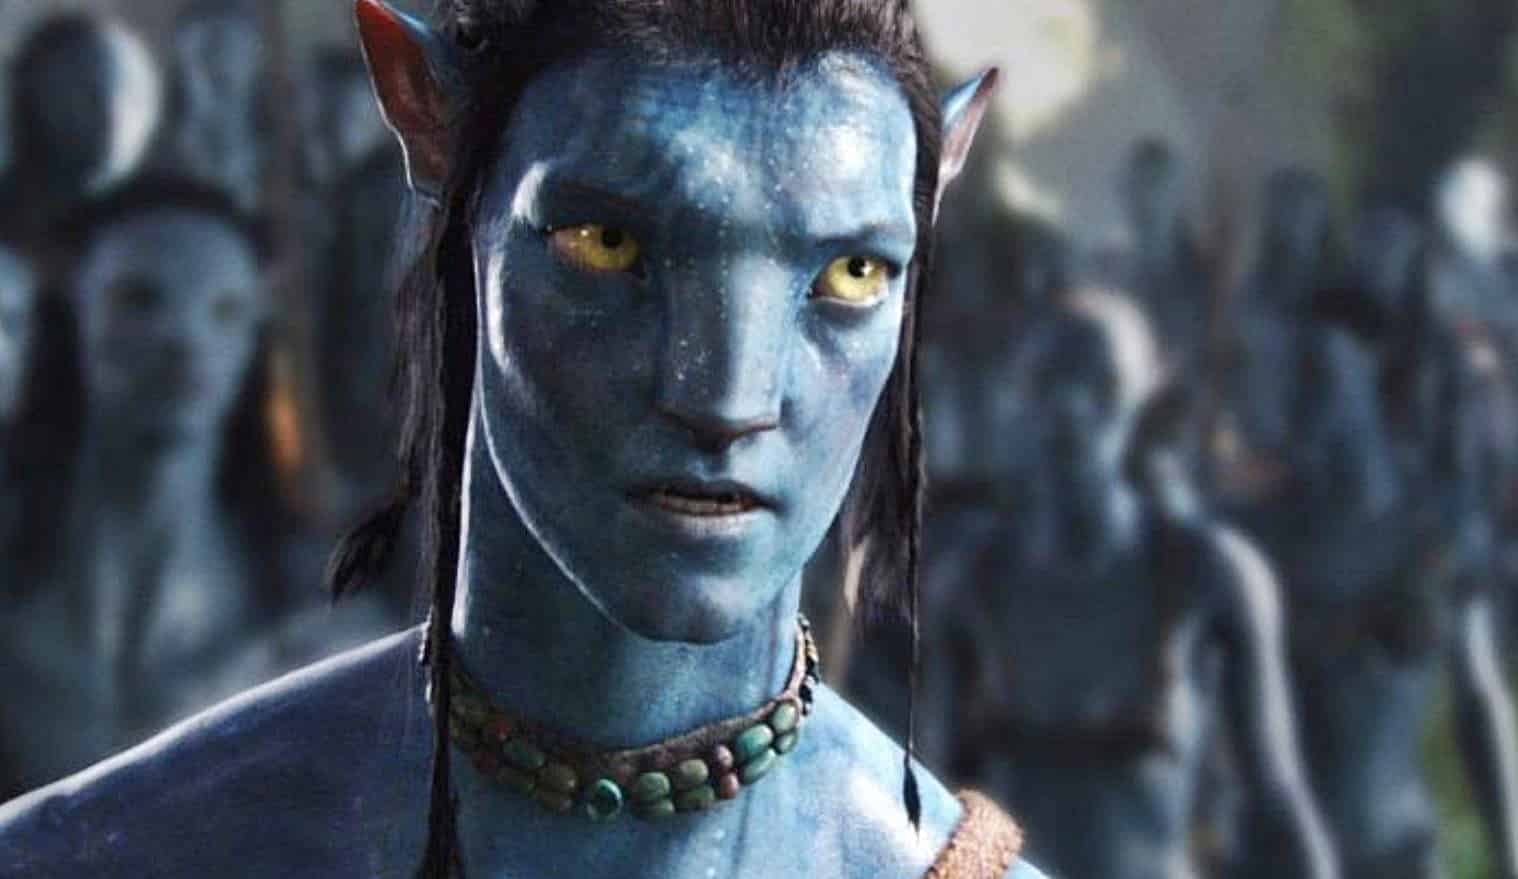 List of 10 Avatars Movies to watch based on Metaverse